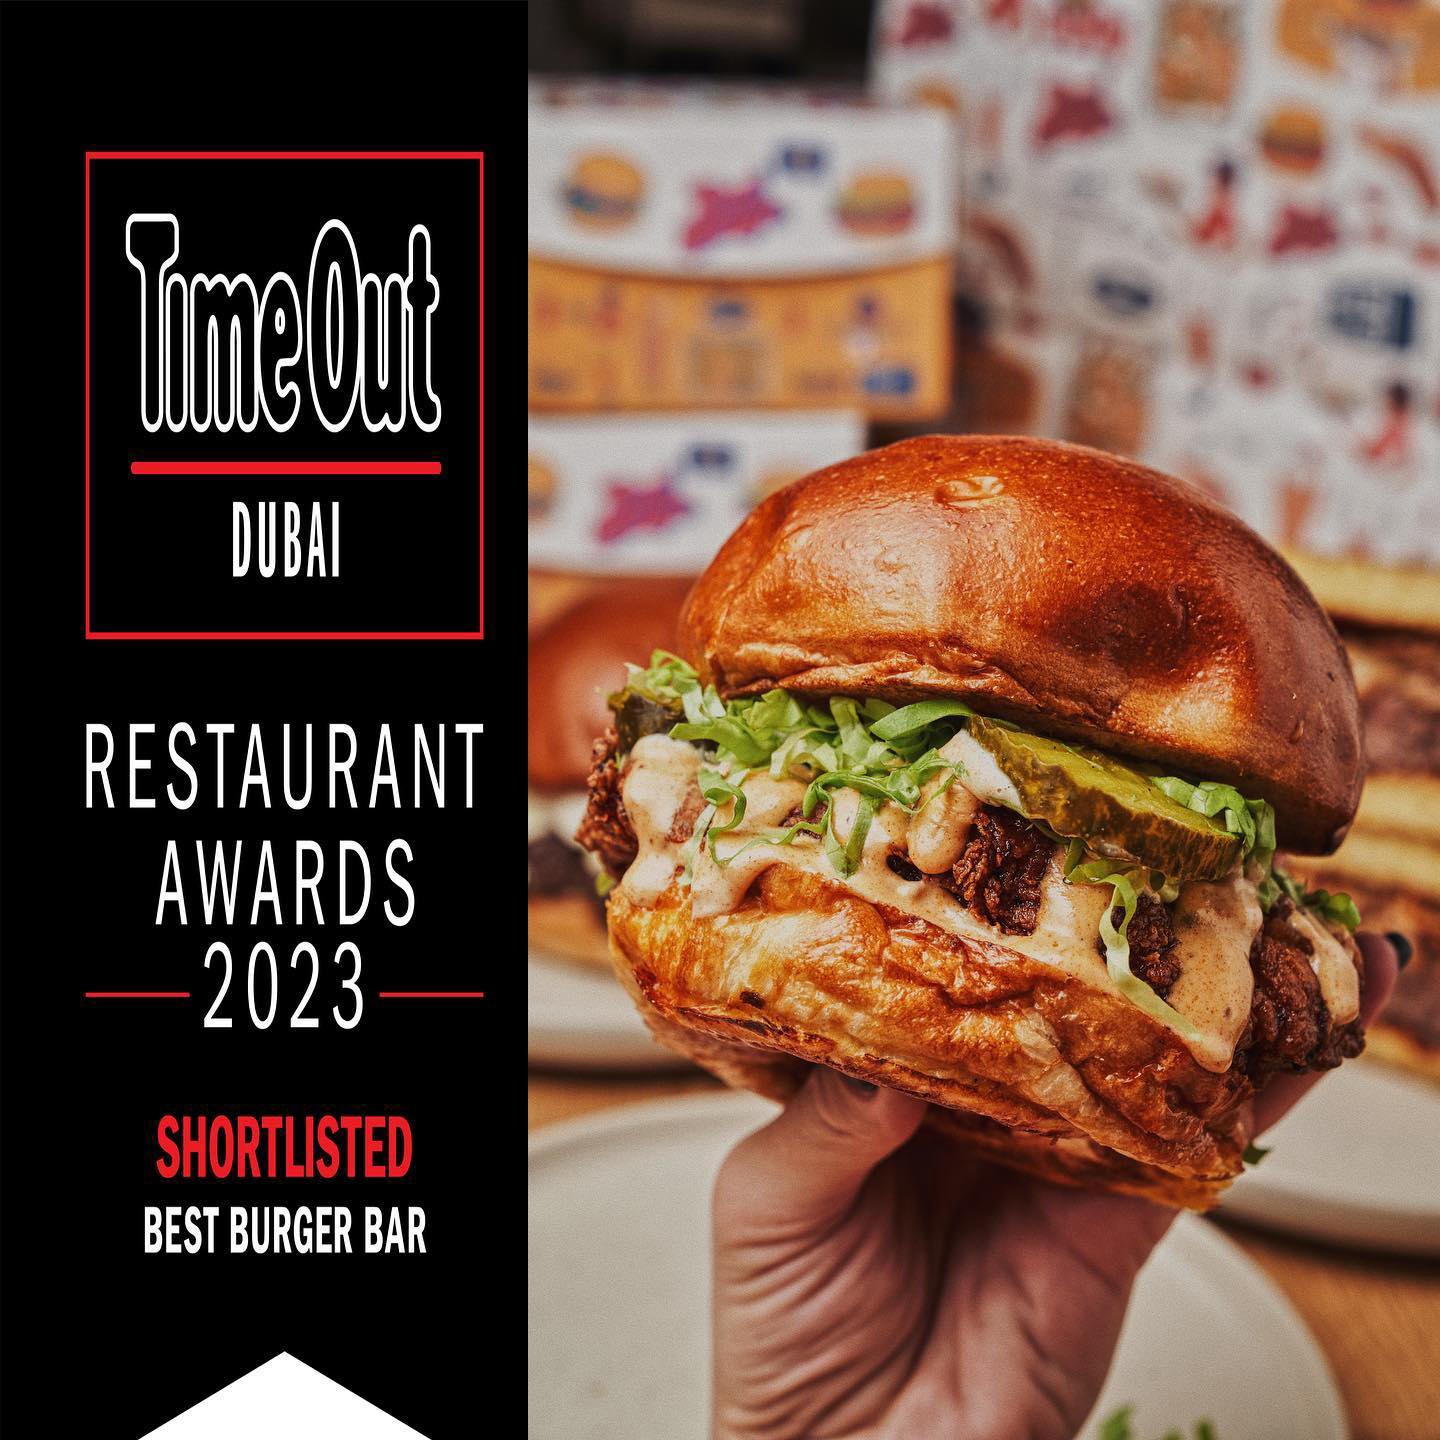 Good Burger is short listed for the #timeoutdubai best burger bar in Dubai